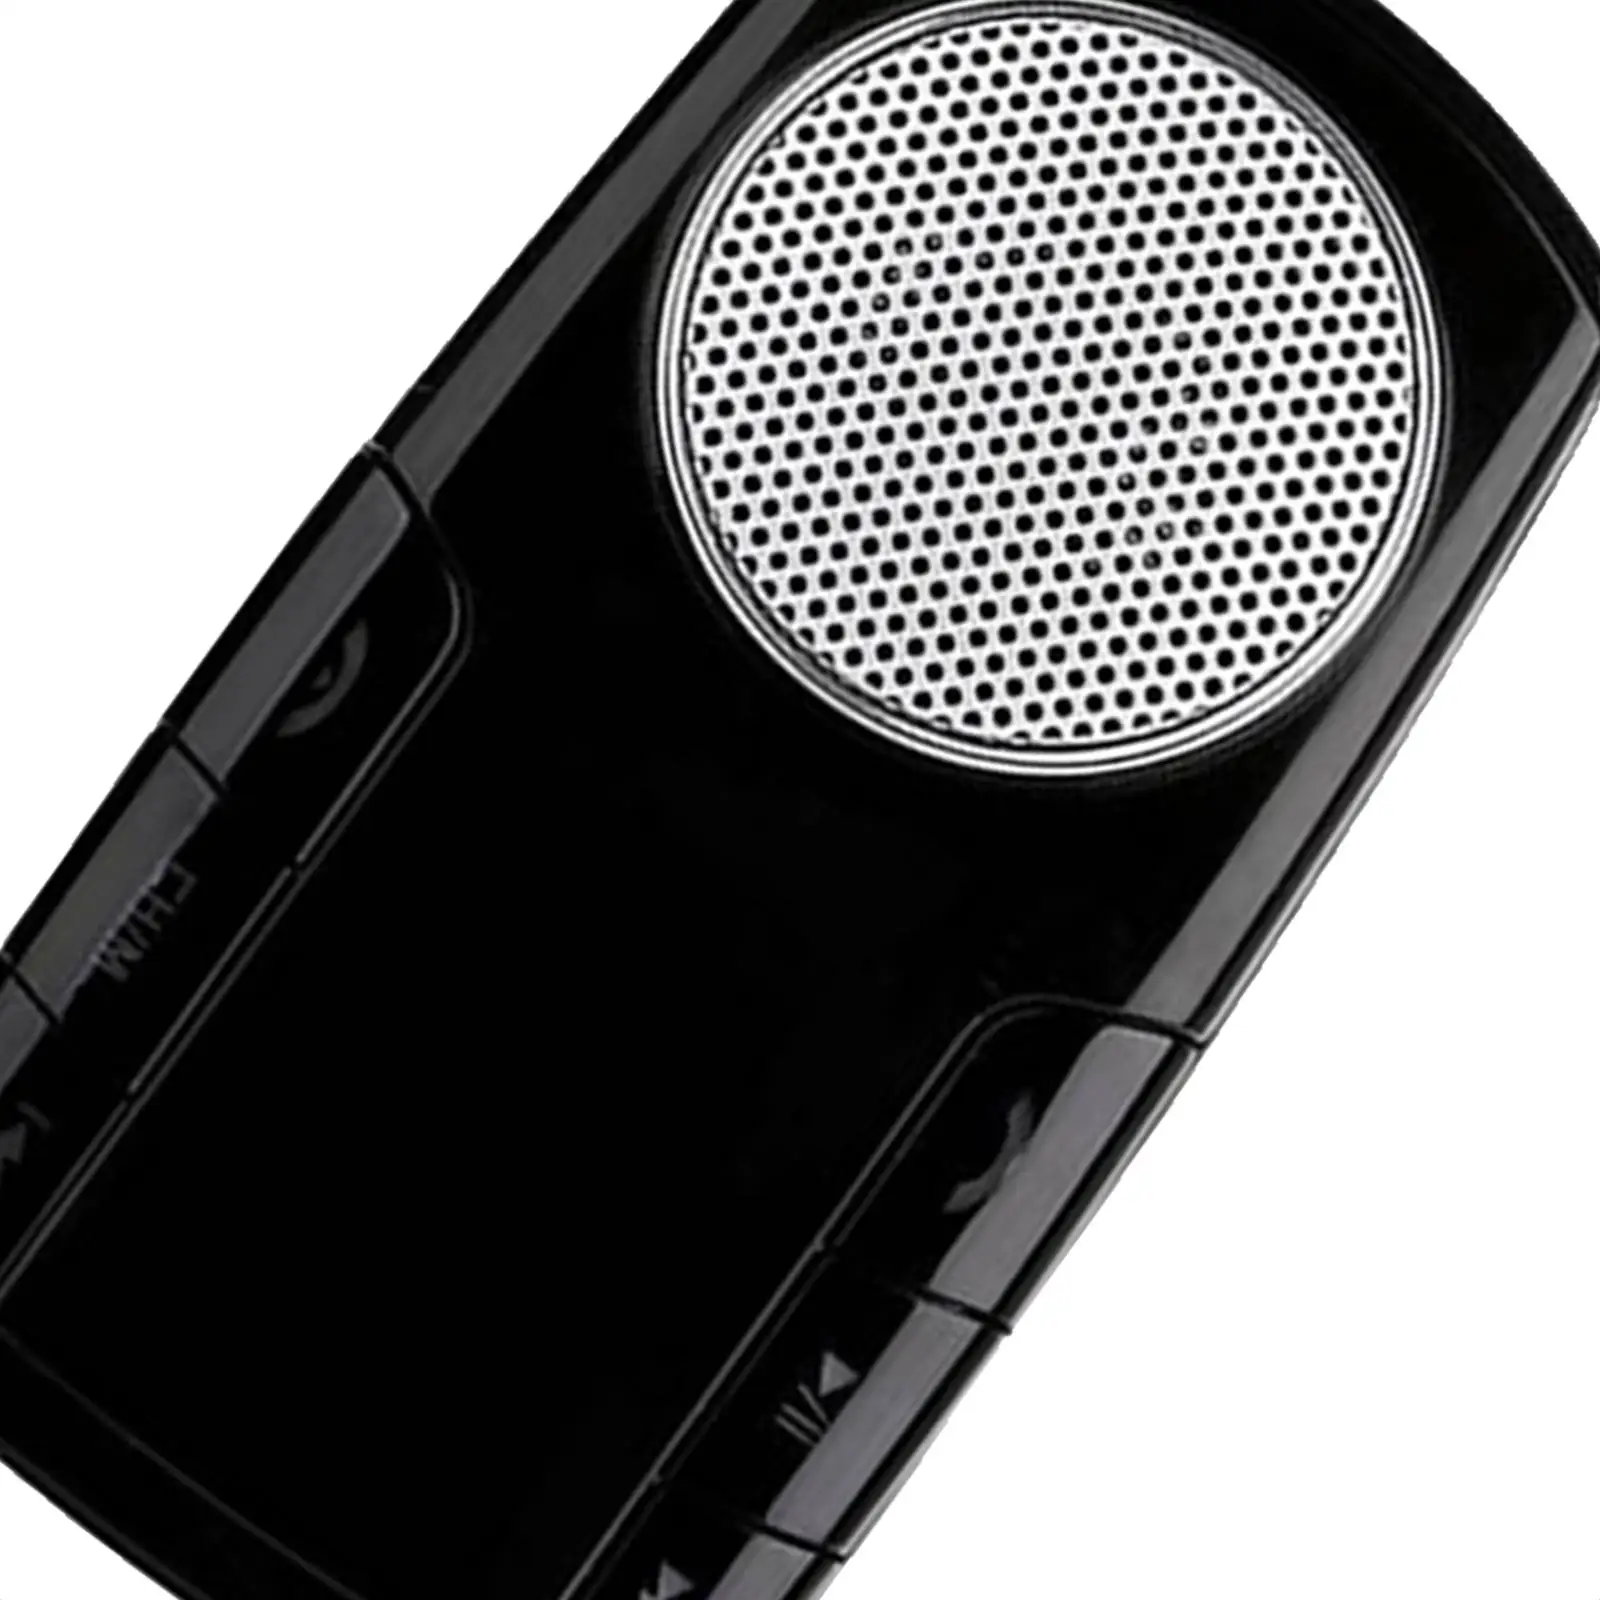 FM Car MP3 Player Speakerphone Support/Card USB Port